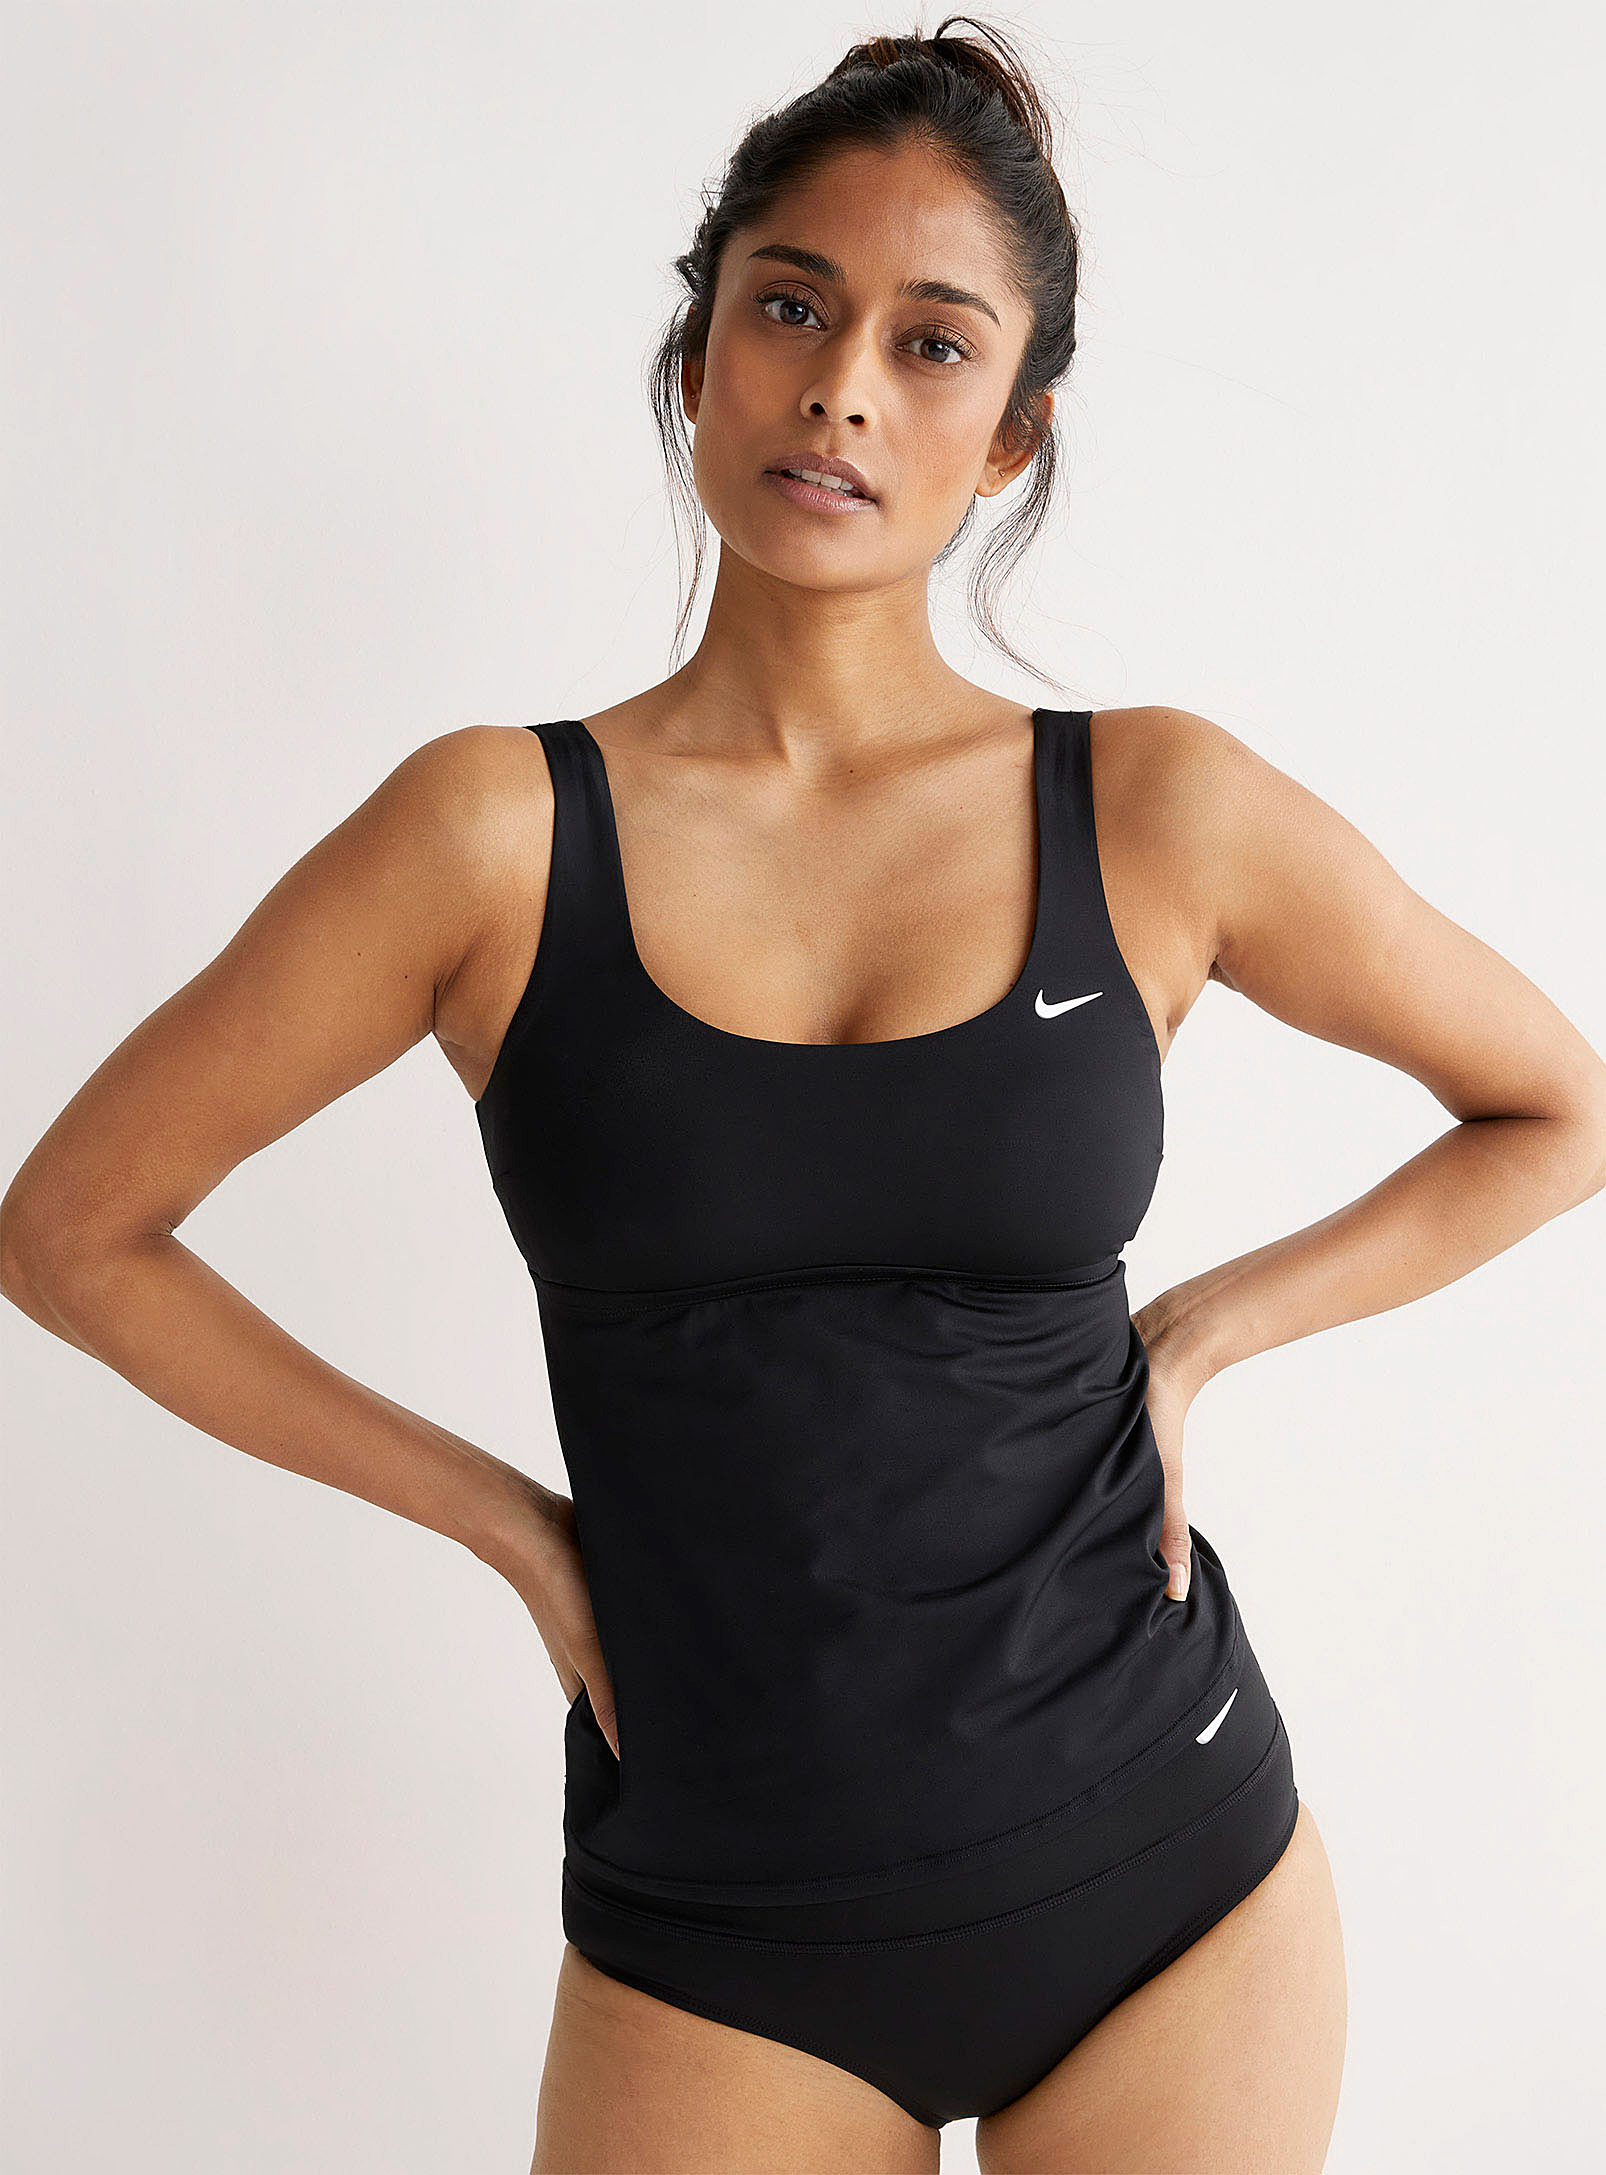 Nike - Women's Athletic Tank Topini